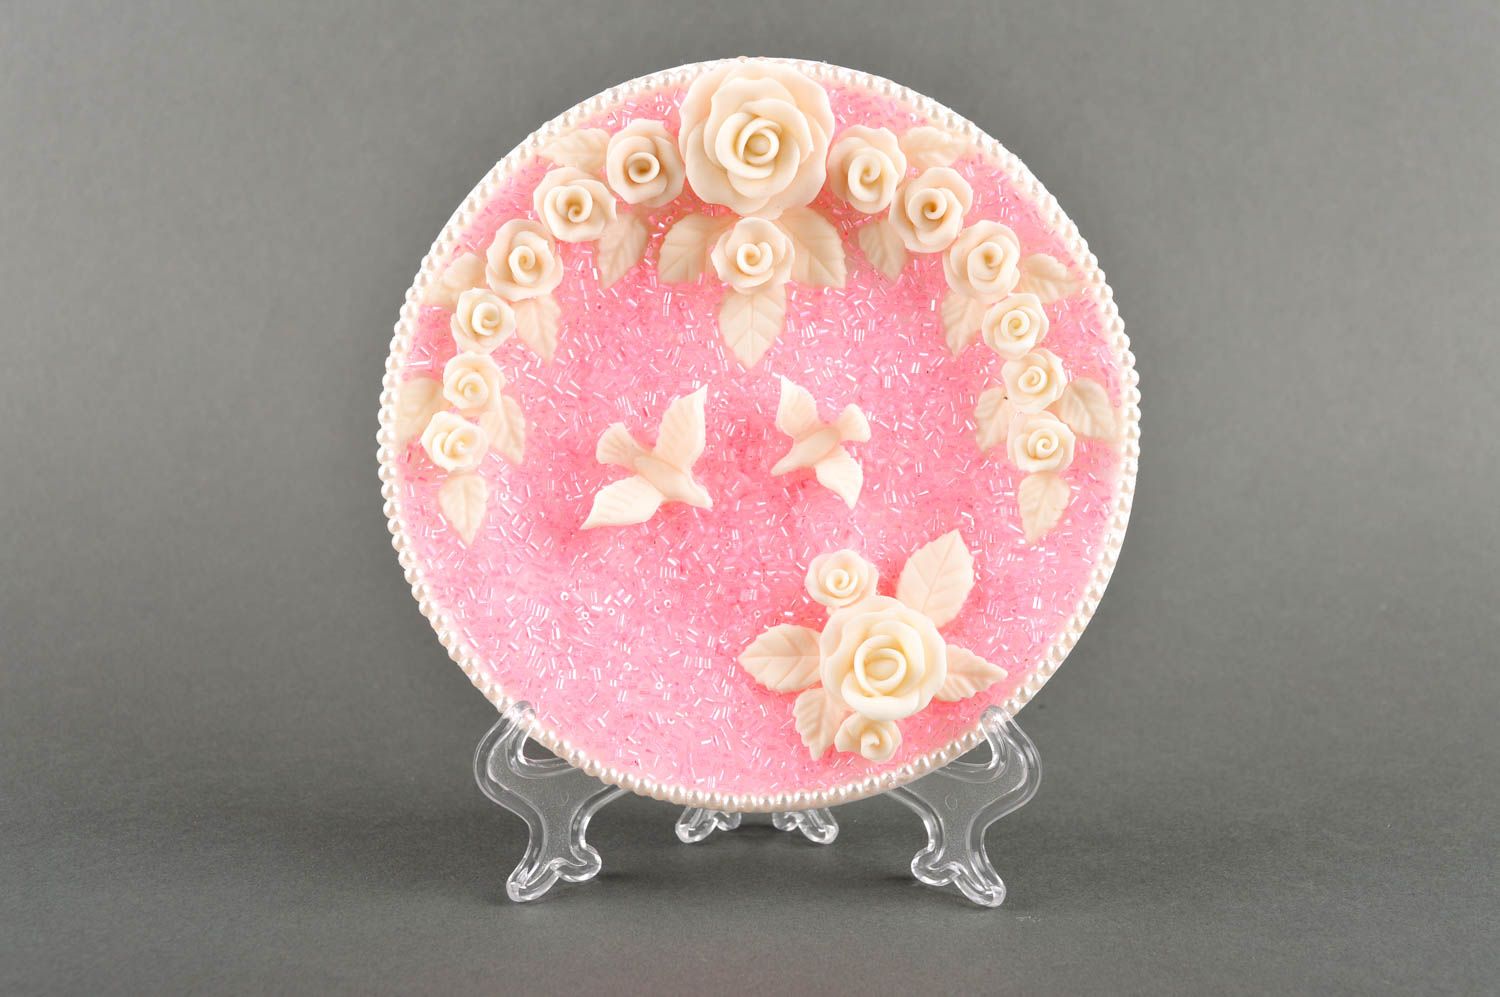 Свадебная тарелка хэнд мэйд посуда на свадьбу красивая посуда розовая тарелка фото 2